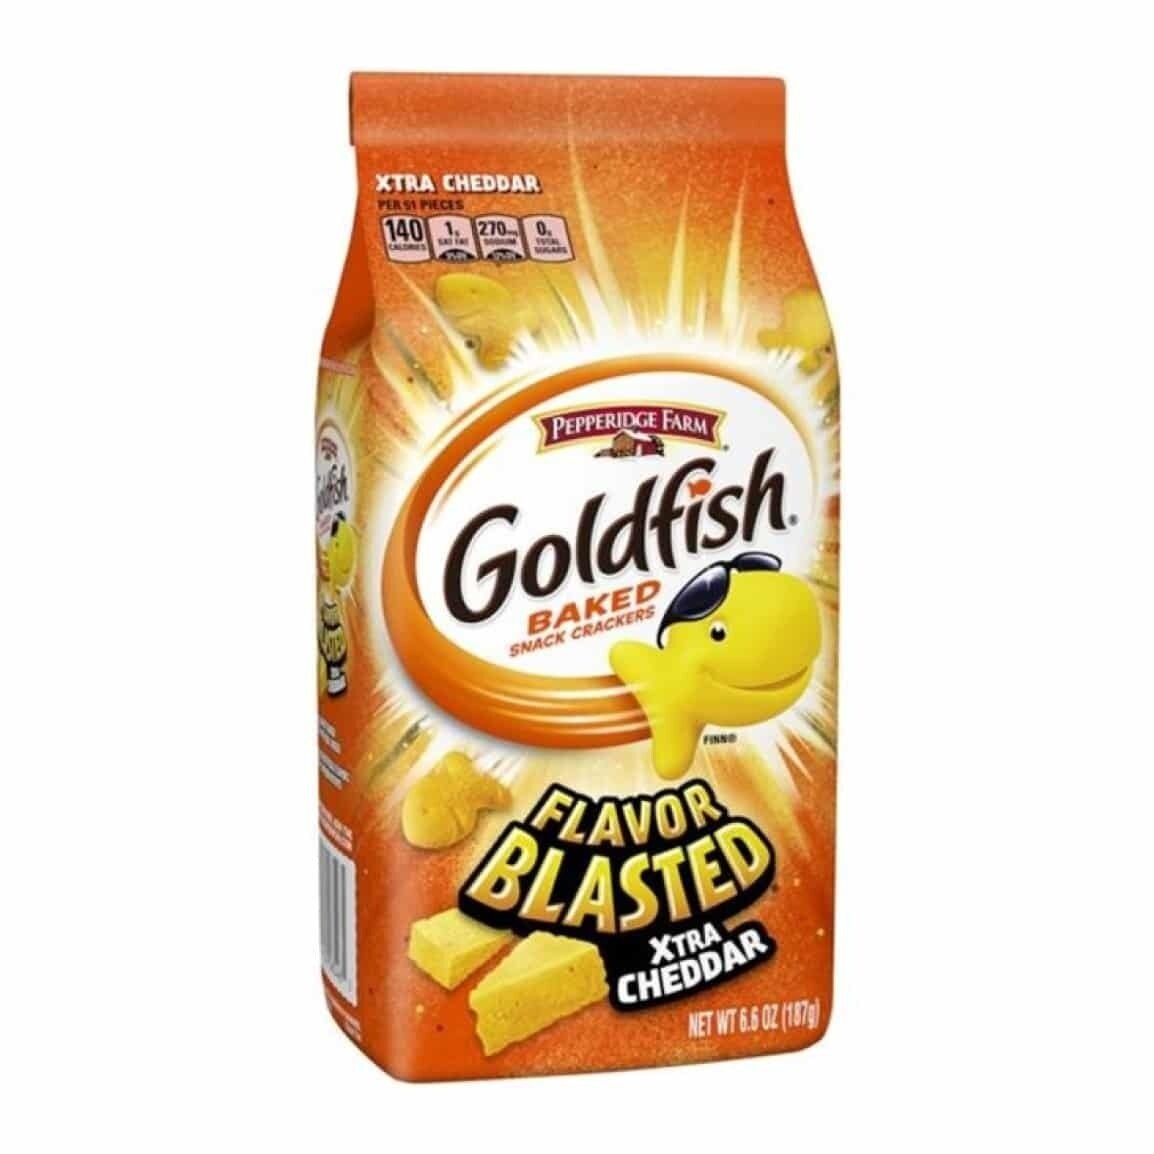 Goldfish Explosive Cheddar Crackers 187g